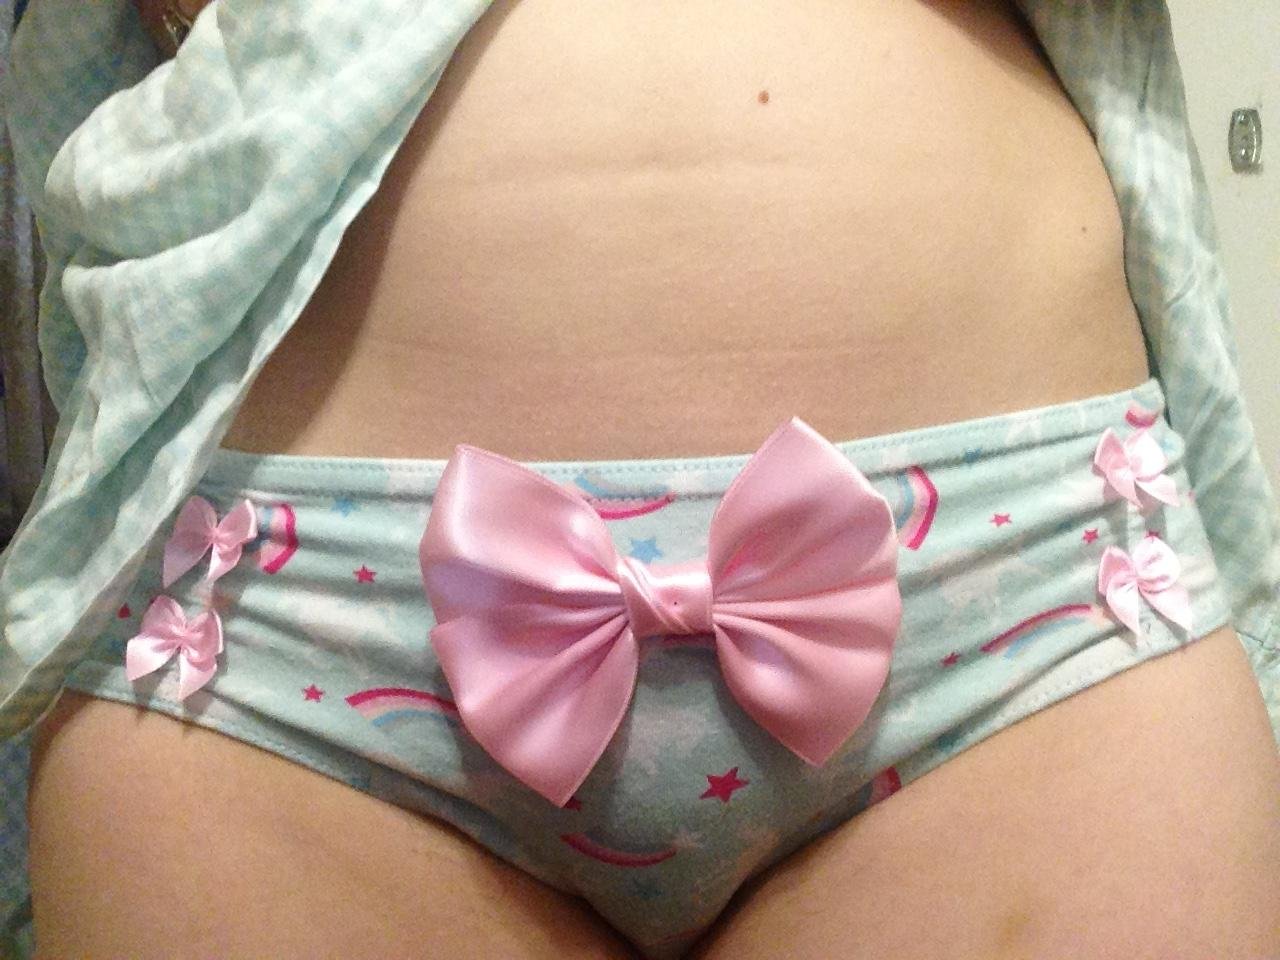 My new favorite panties! 